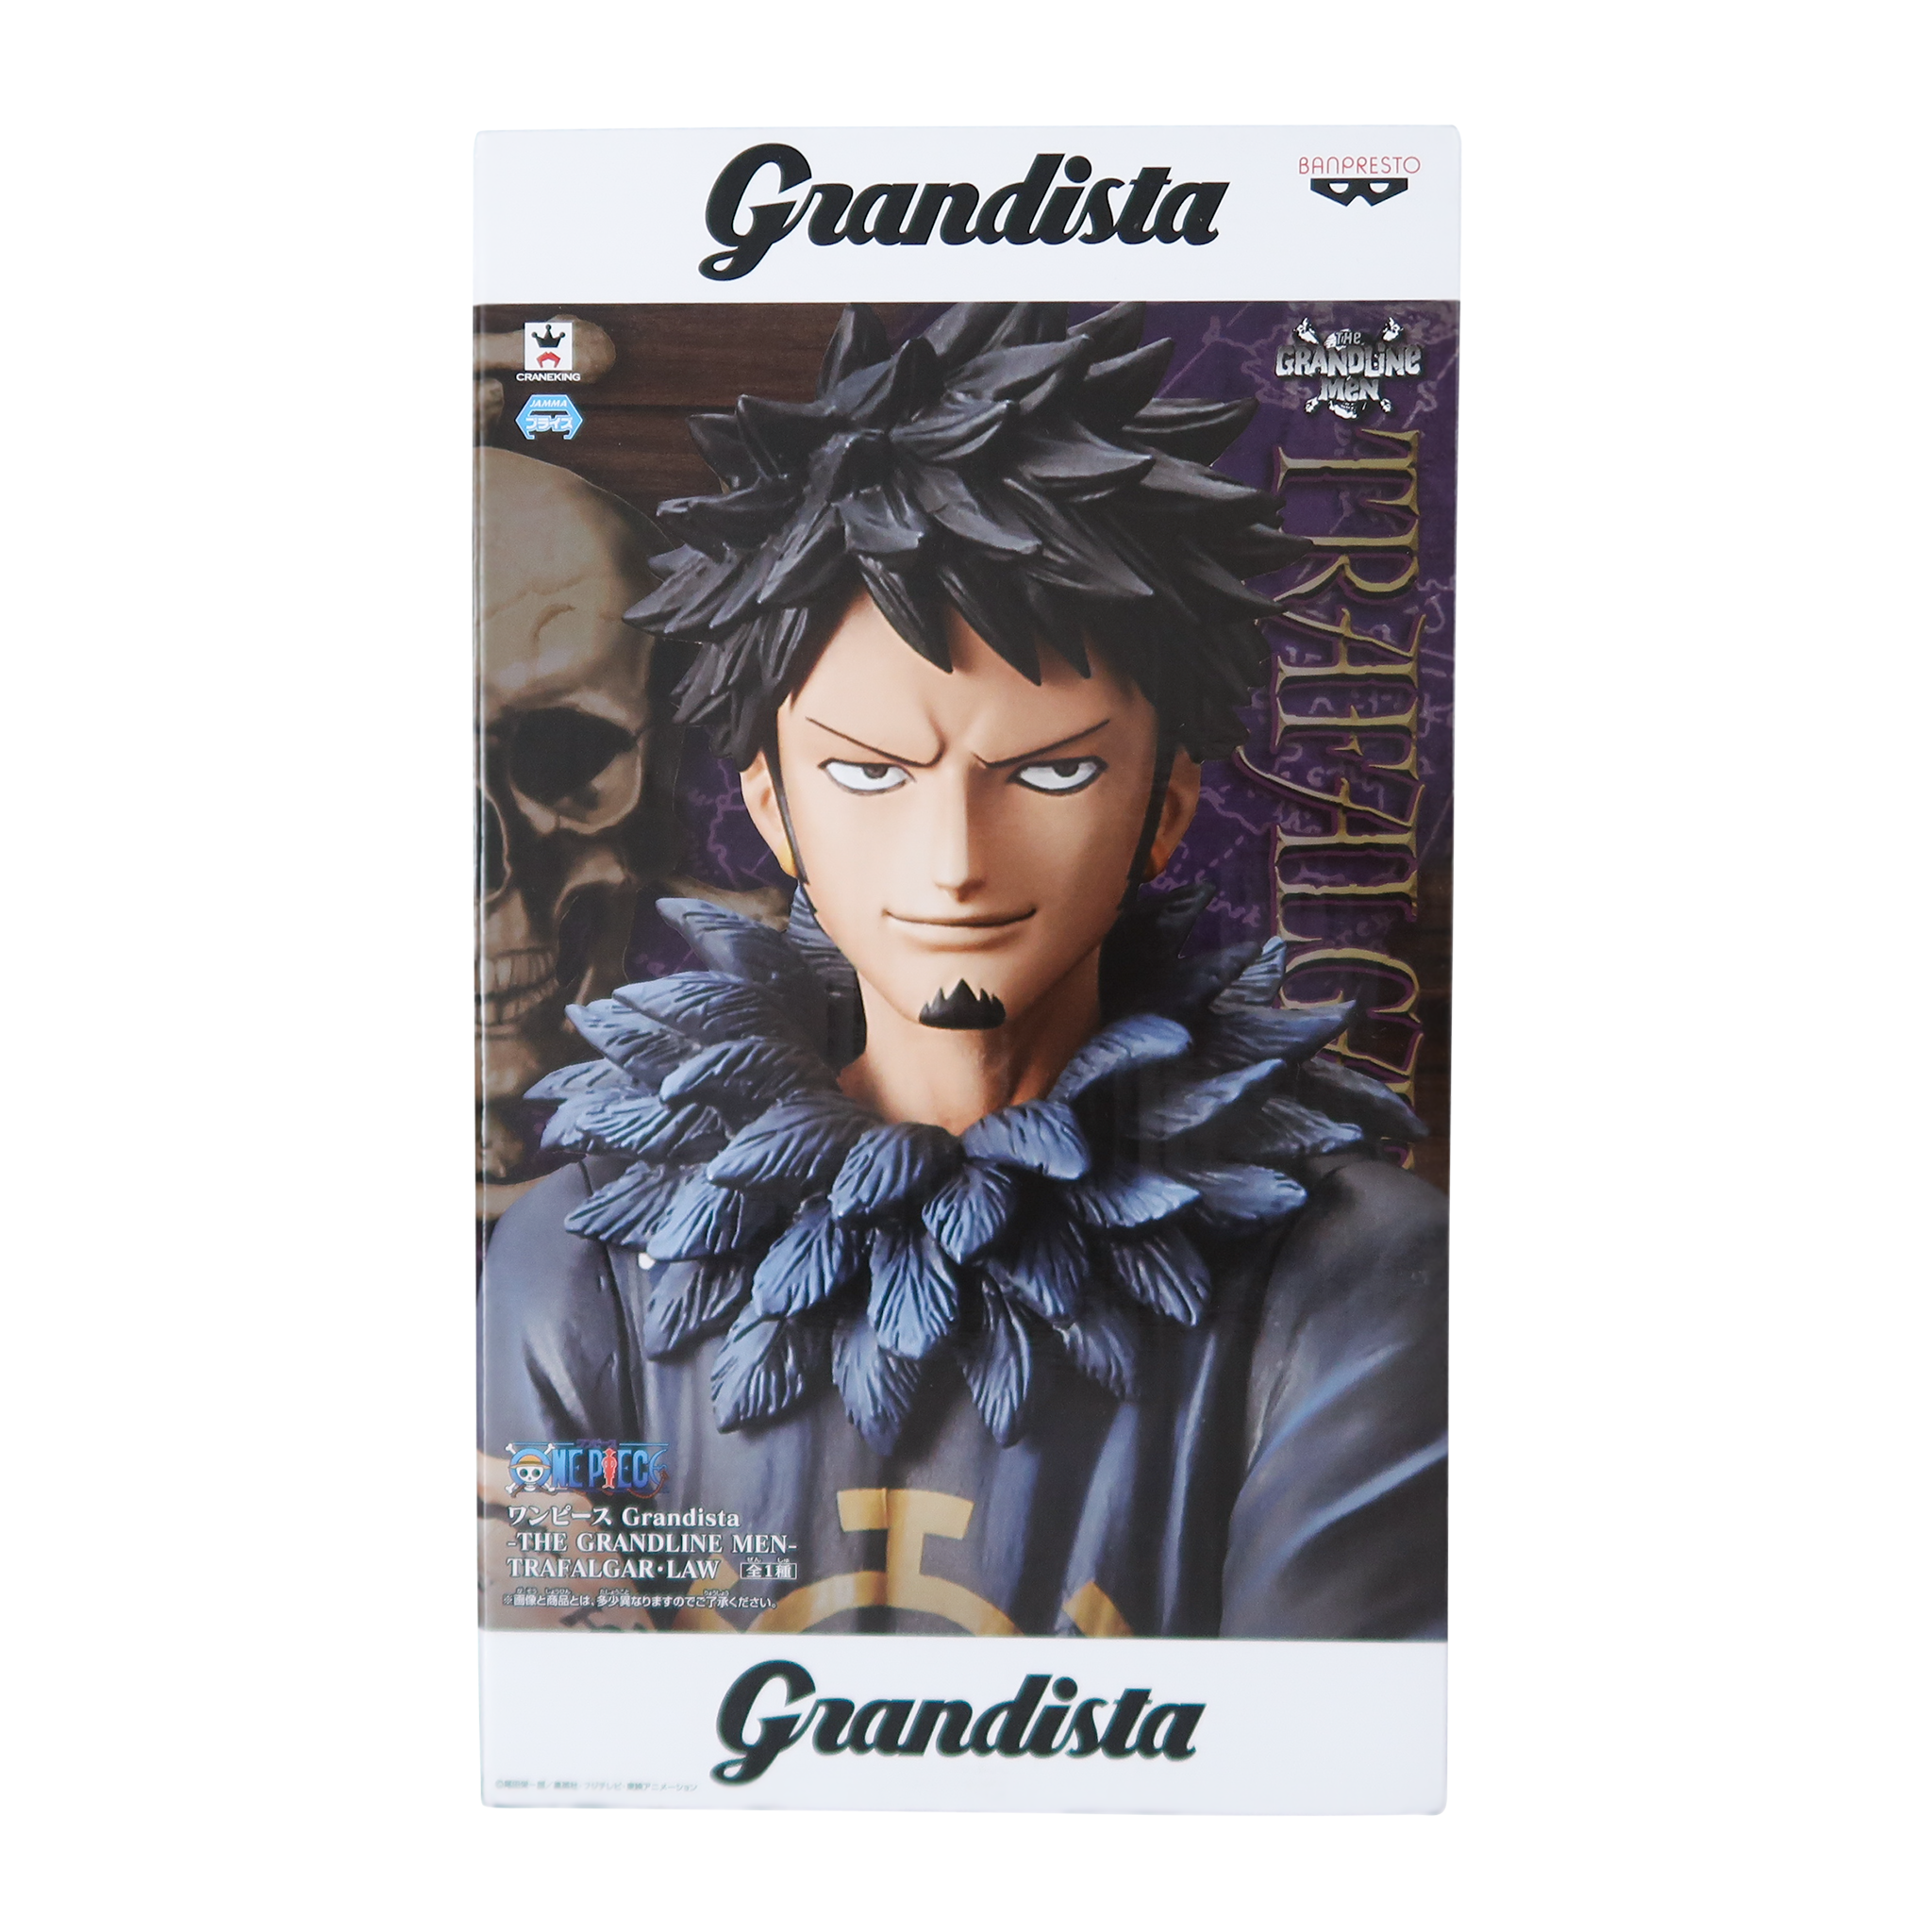 One Piece "Trafalgar Law" – Grandista The Grandline Men